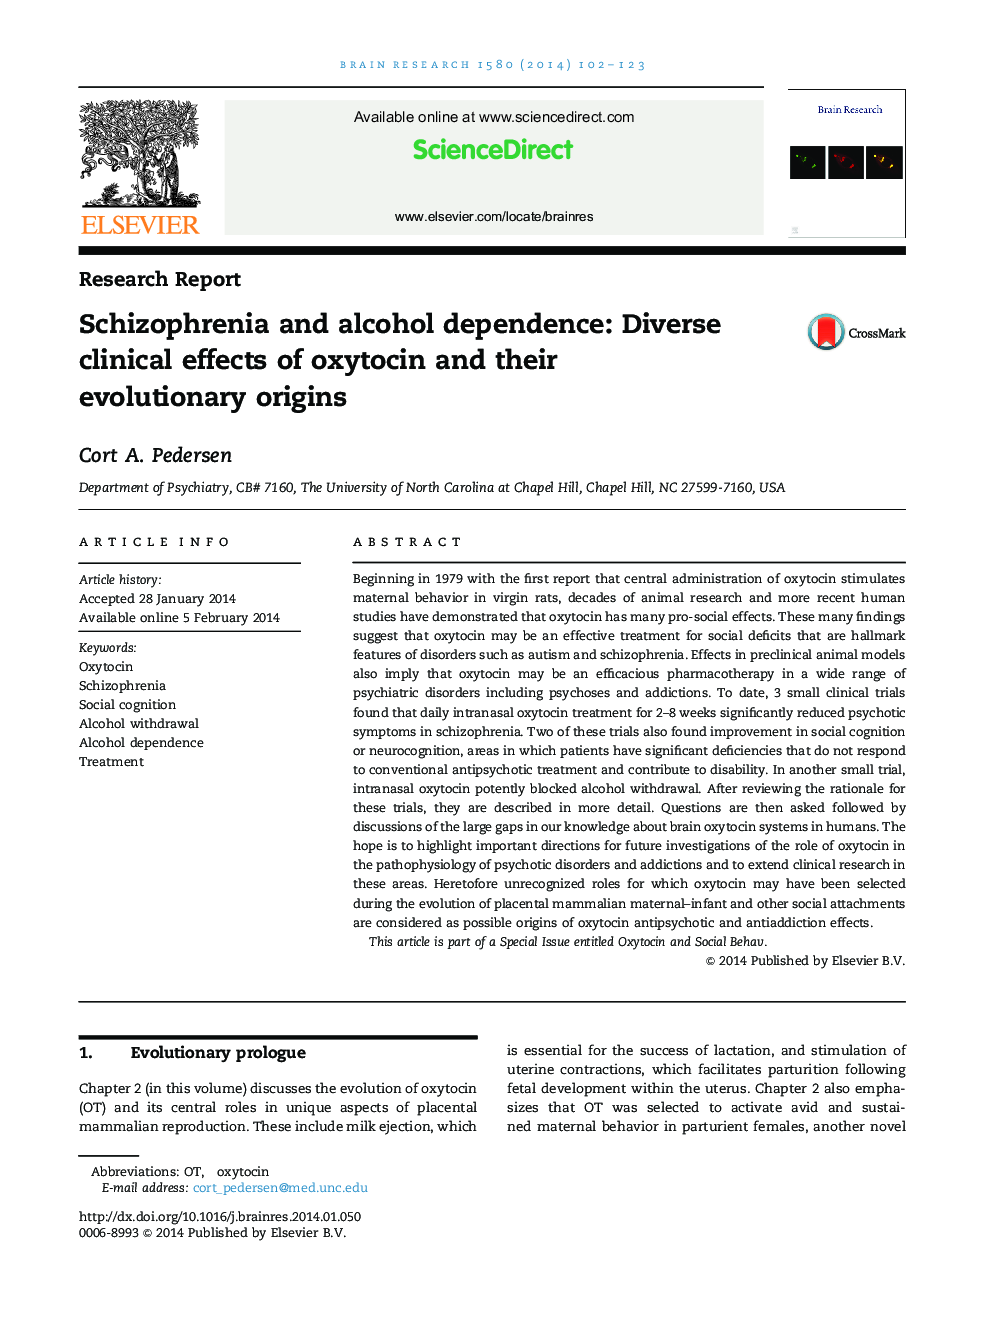 Schizophrenia and alcohol dependence: Diverse clinical effects of oxytocin and their evolutionary origins